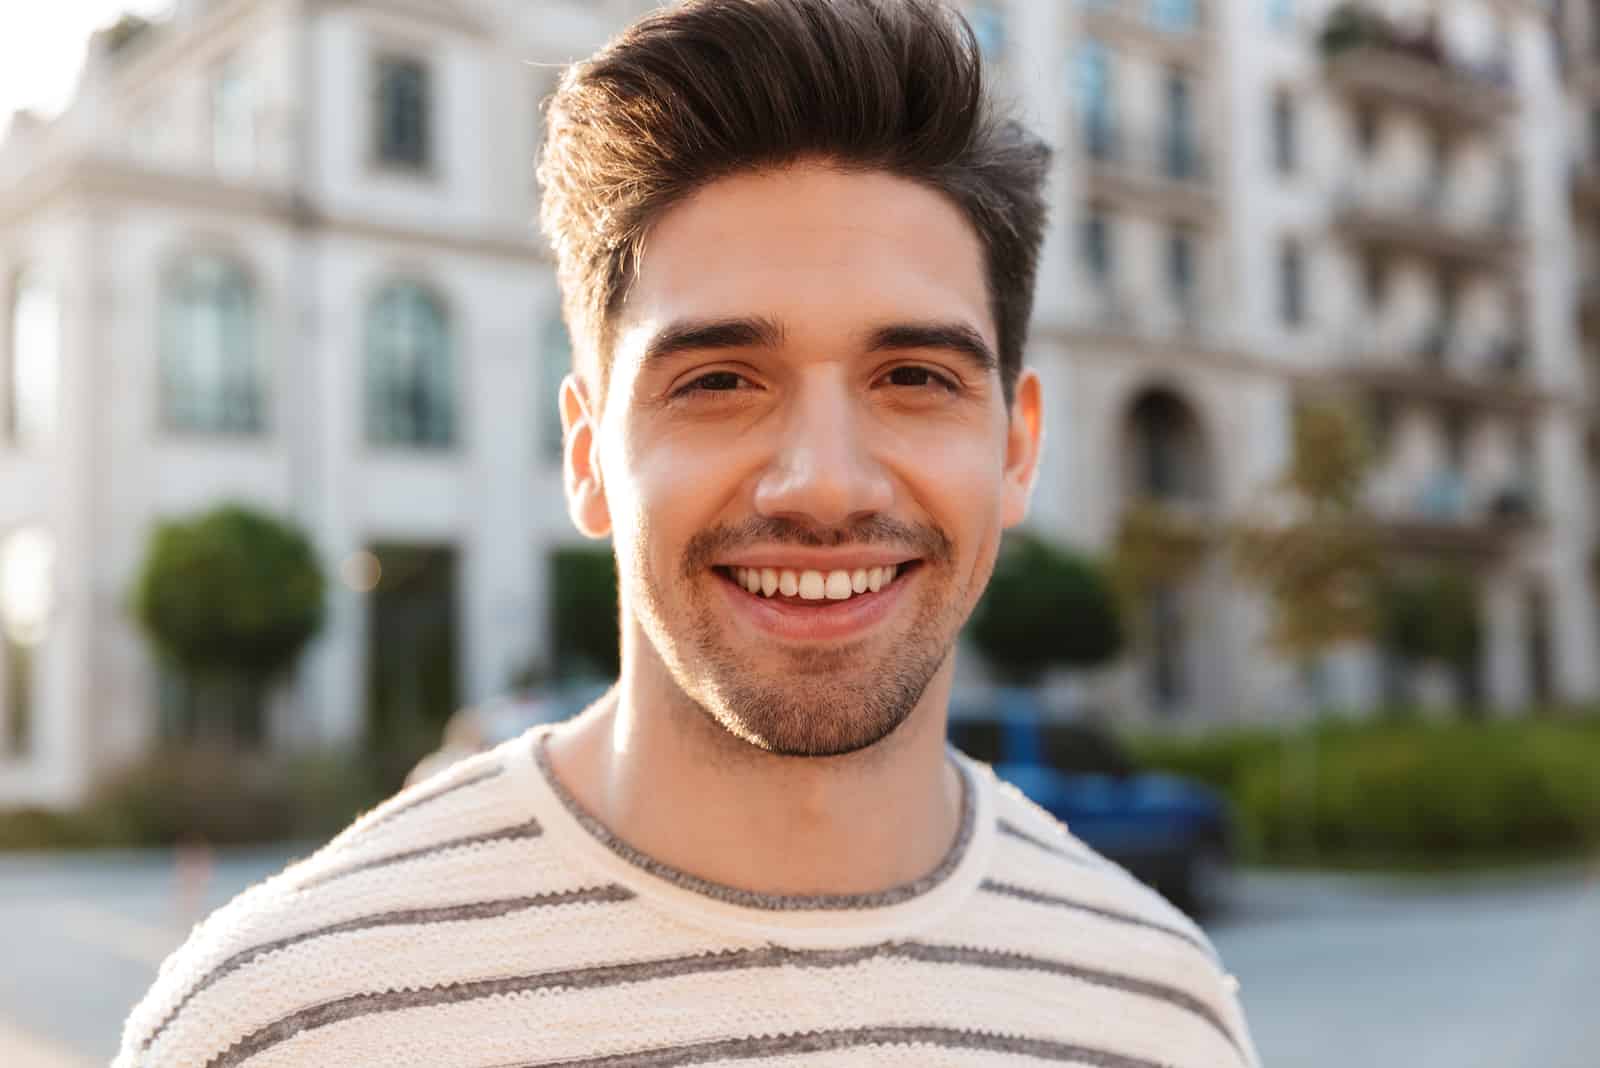 handsome man smiling and looking at camera while walking at city street